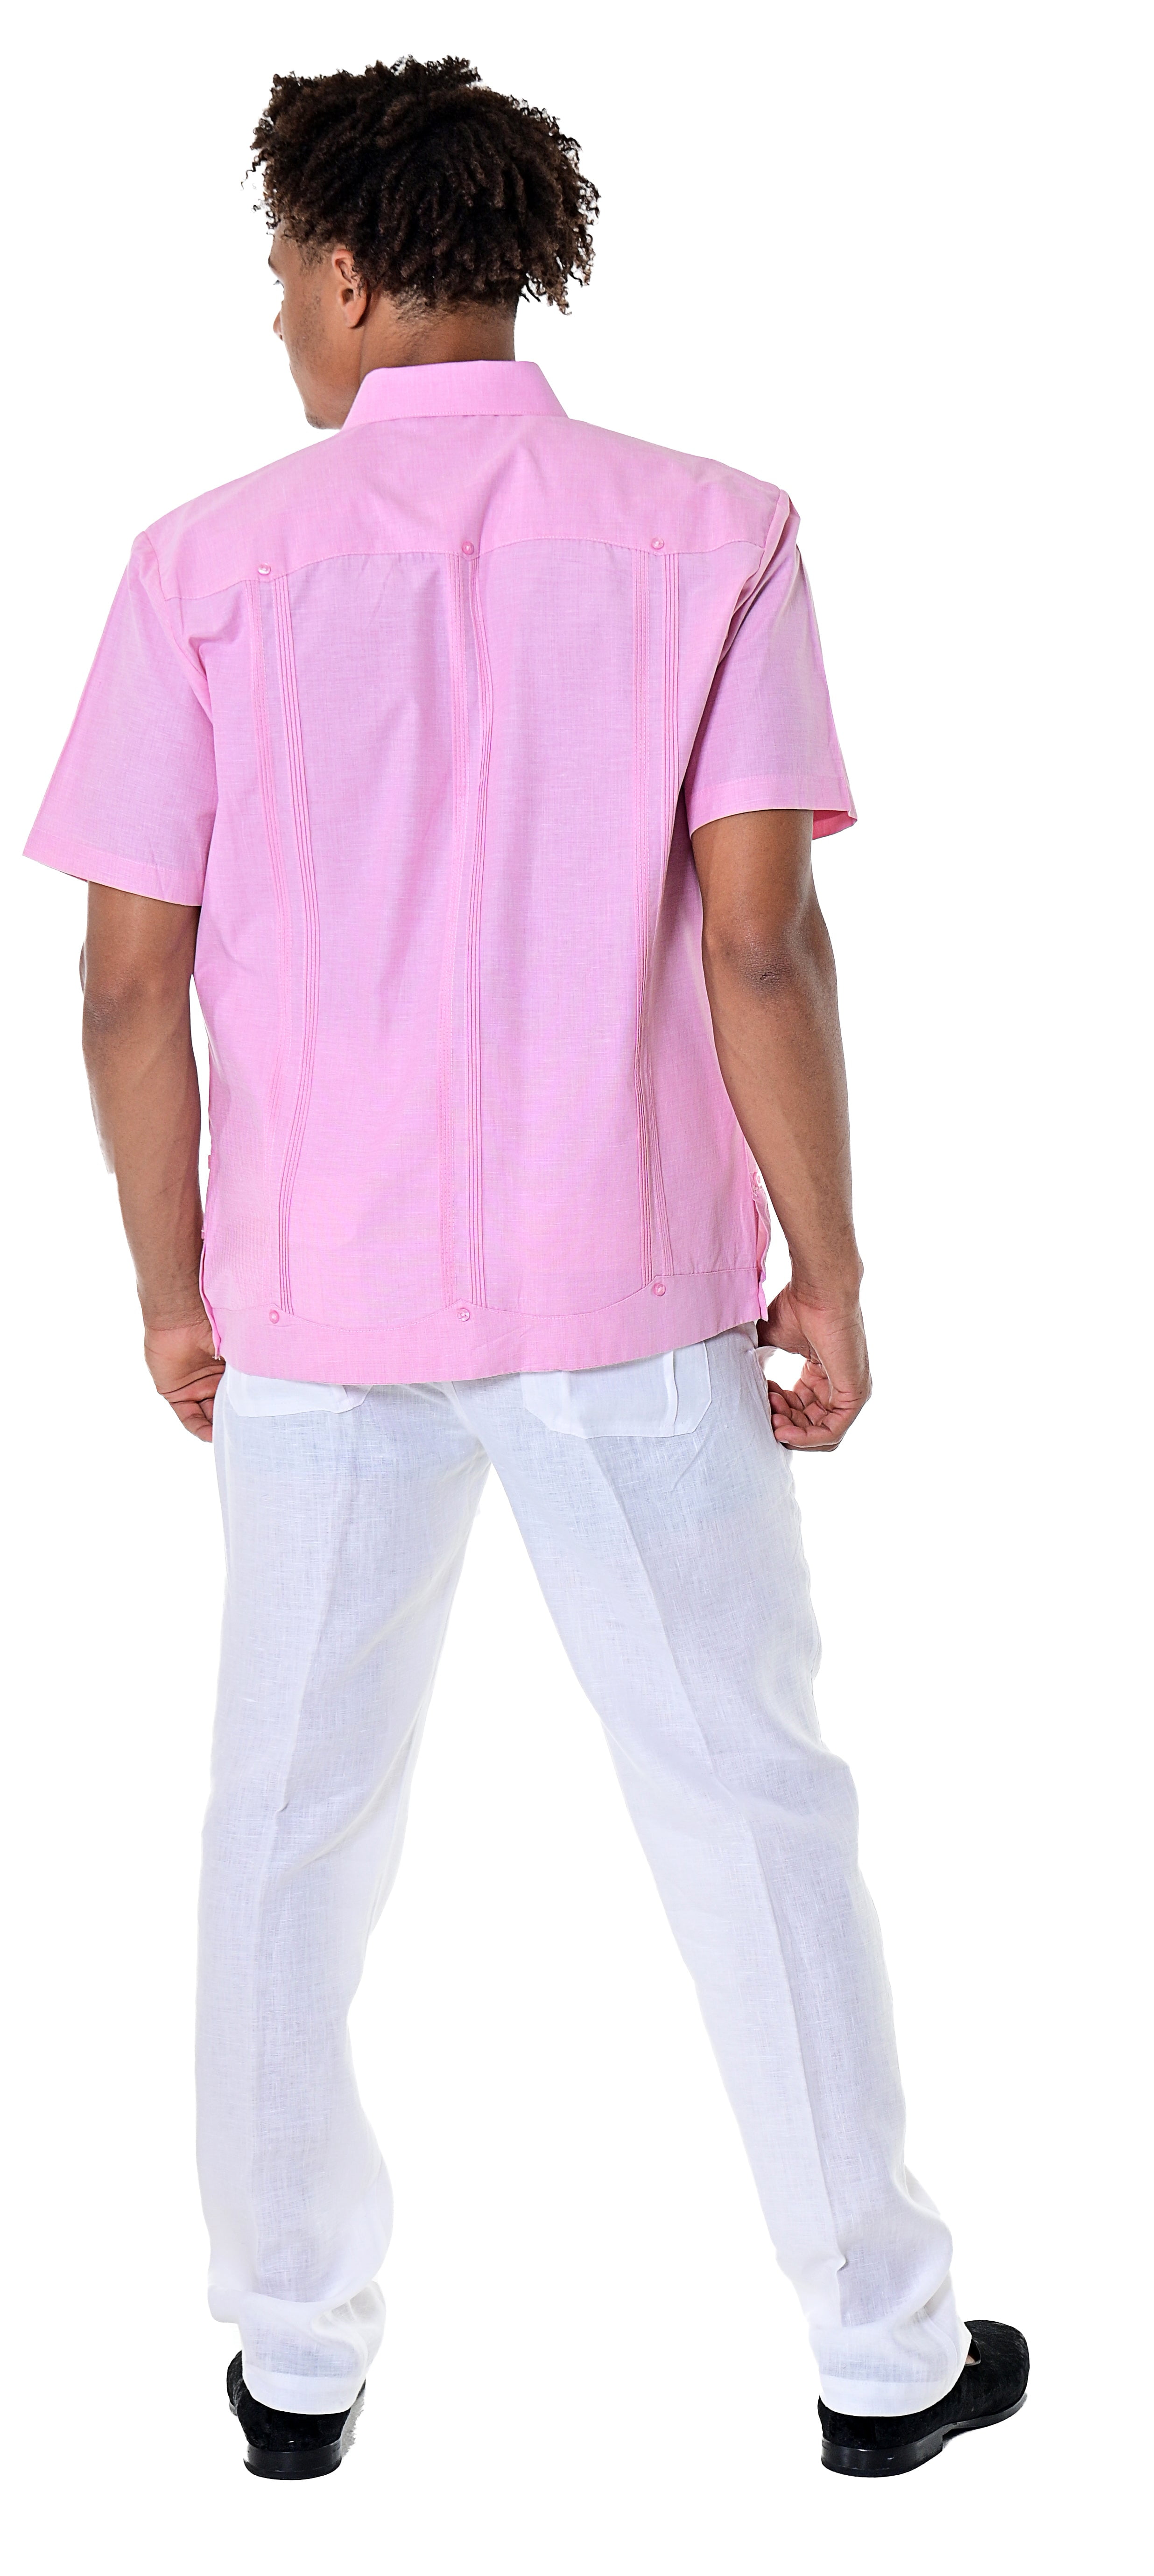 Bohio Men's 4 Pocket Short Sleeve Guayabera Shirt